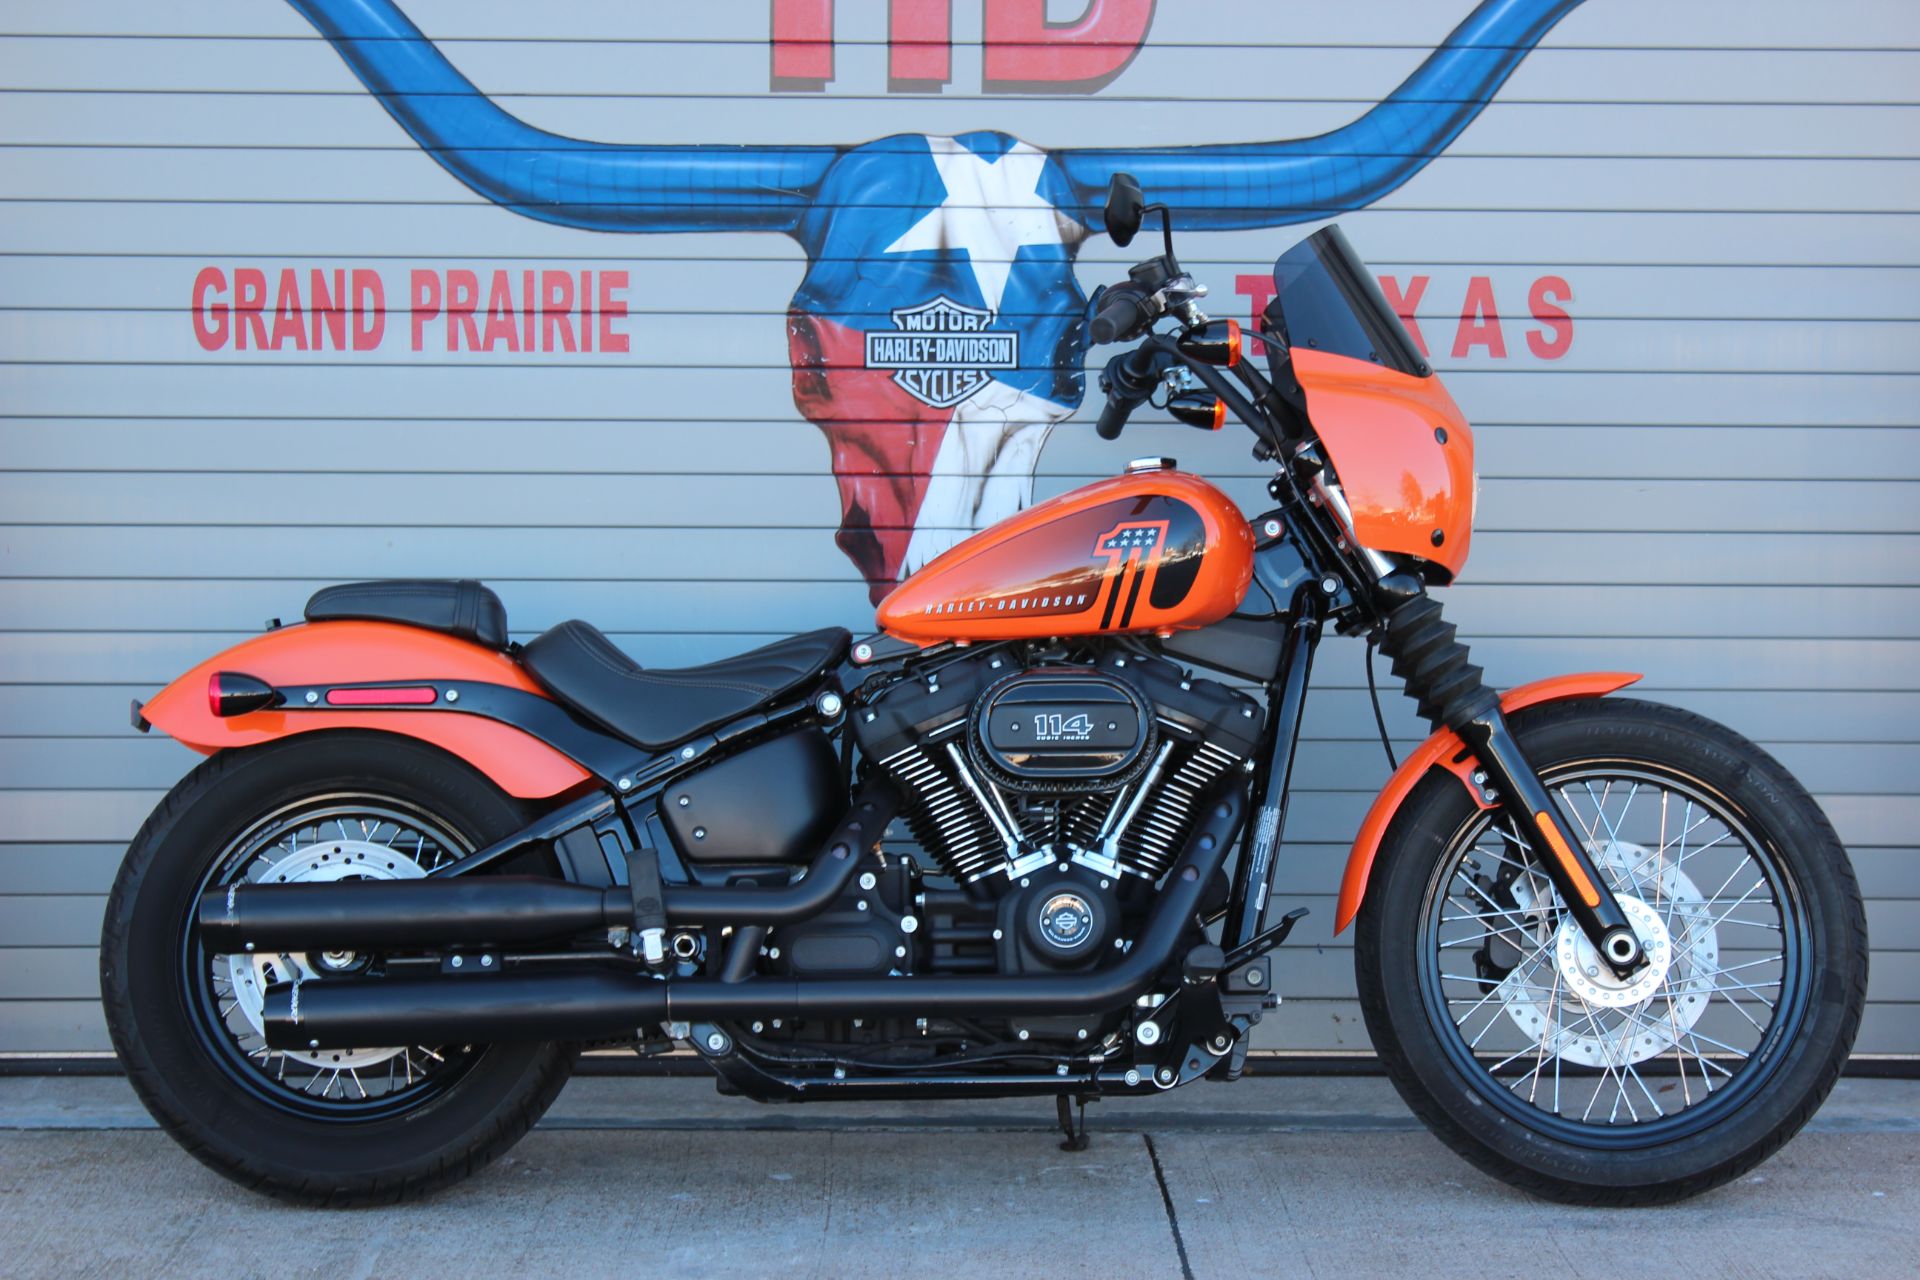 2021 Harley-Davidson Street Bob® 114 in Grand Prairie, Texas - Photo 3